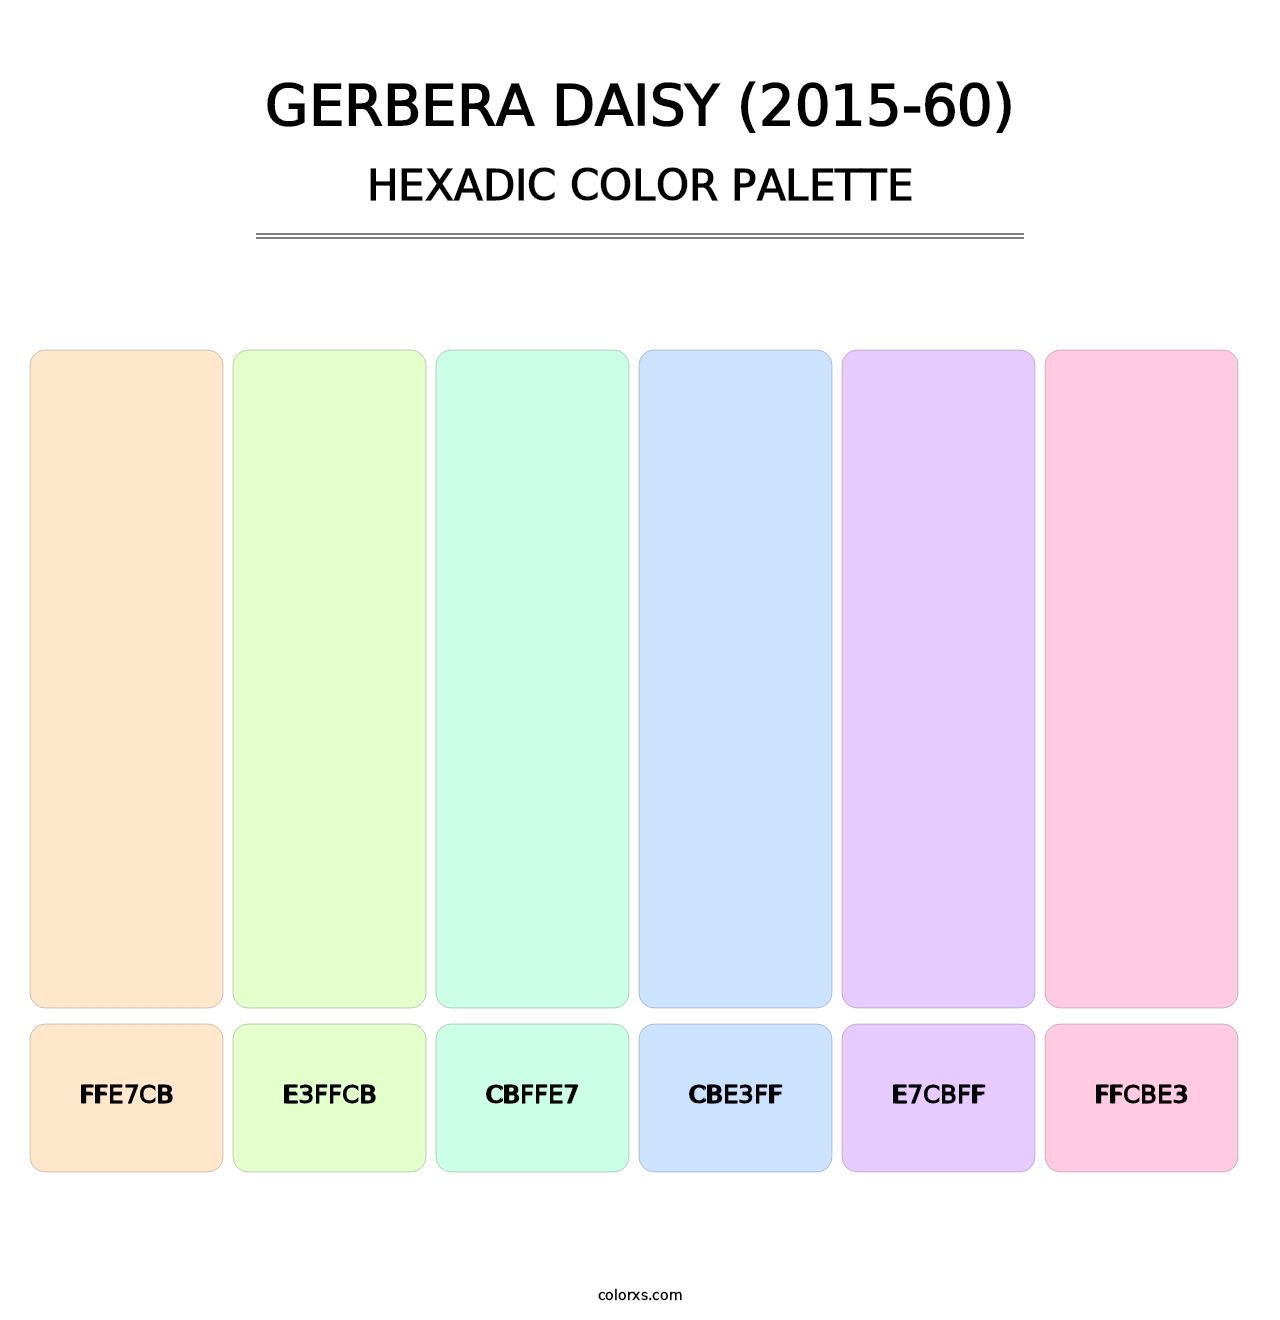 Gerbera Daisy (2015-60) - Hexadic Color Palette